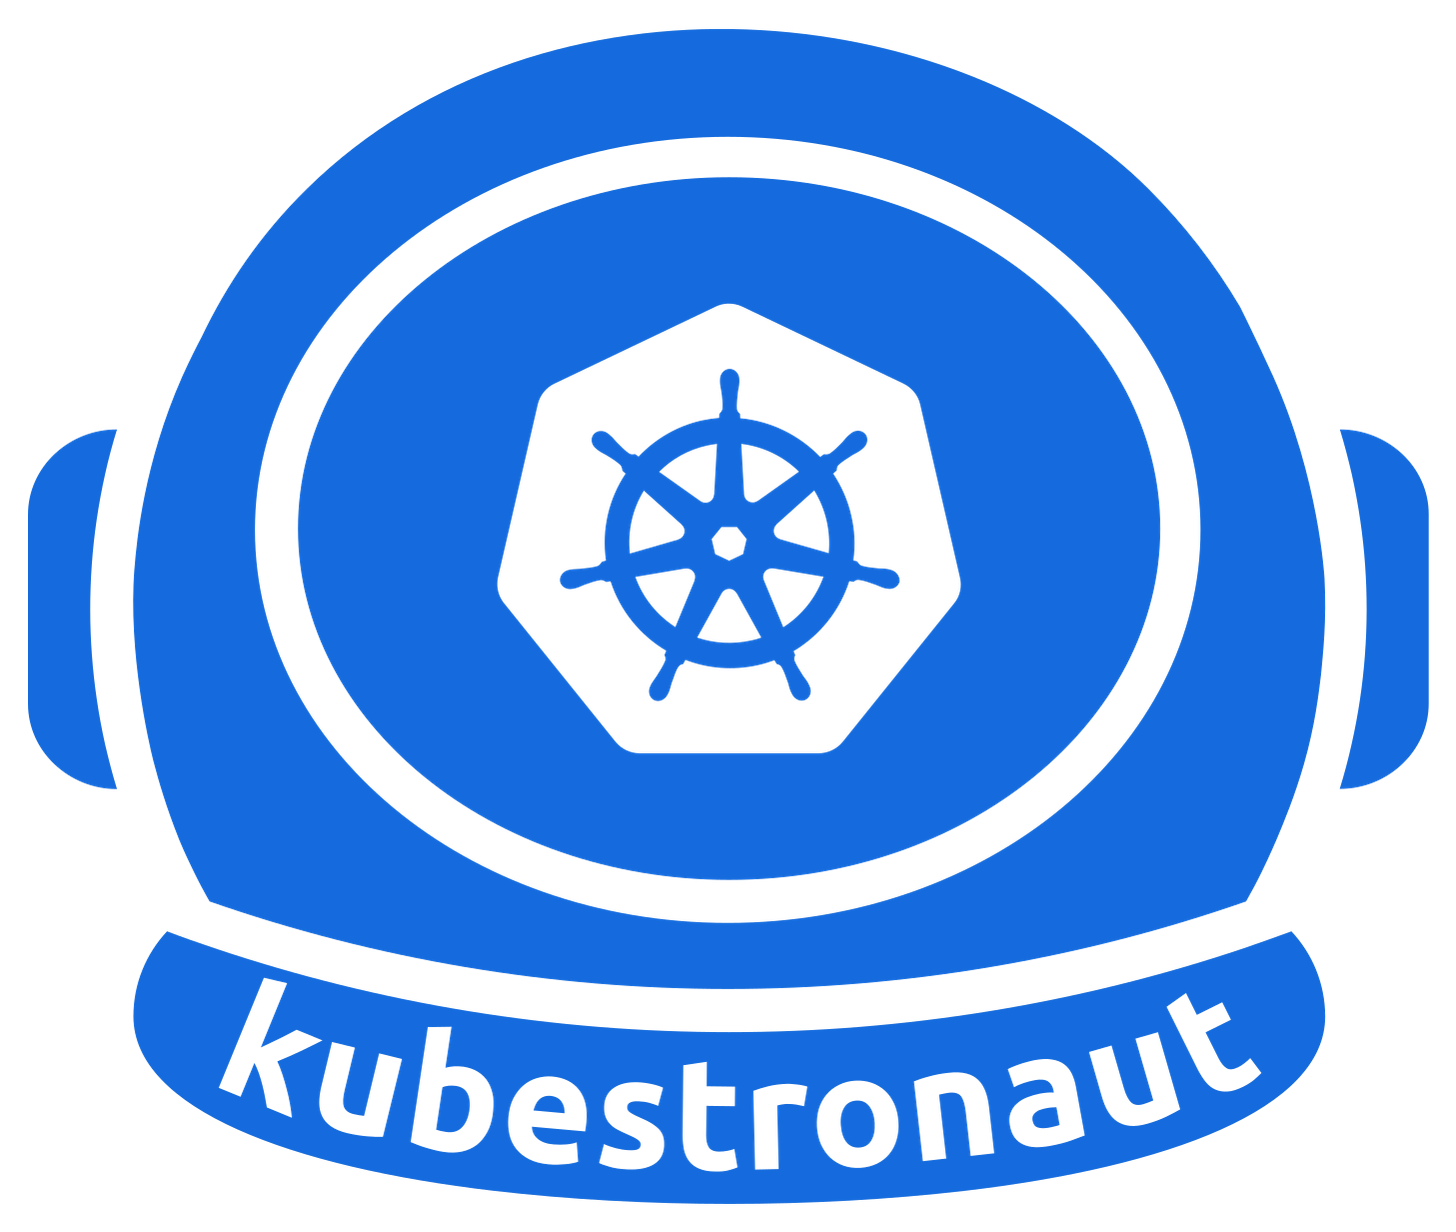 Kubestronaut logo